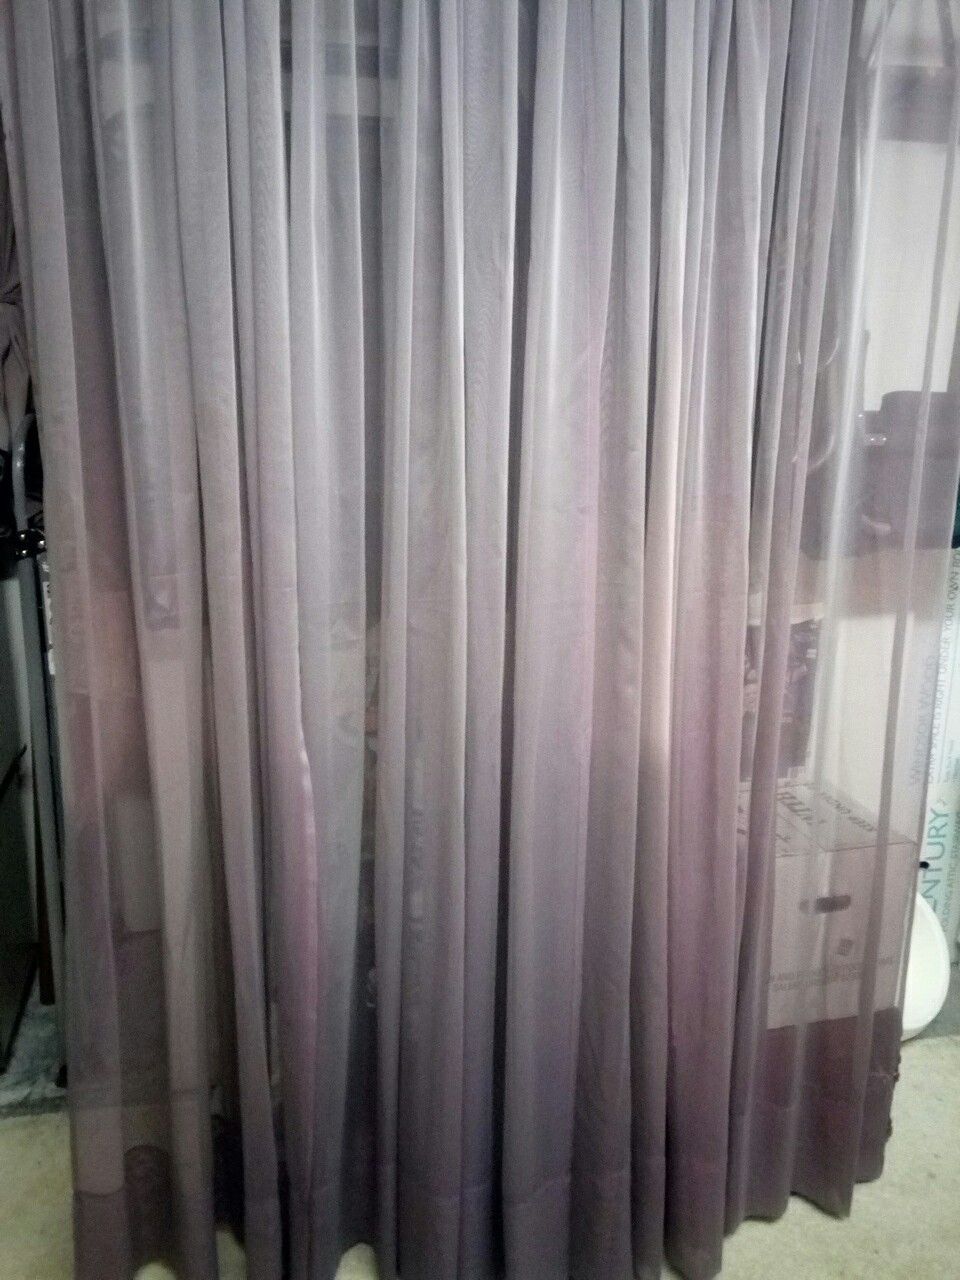 Beautiful lavender/blueish iridescent shear curtain panels